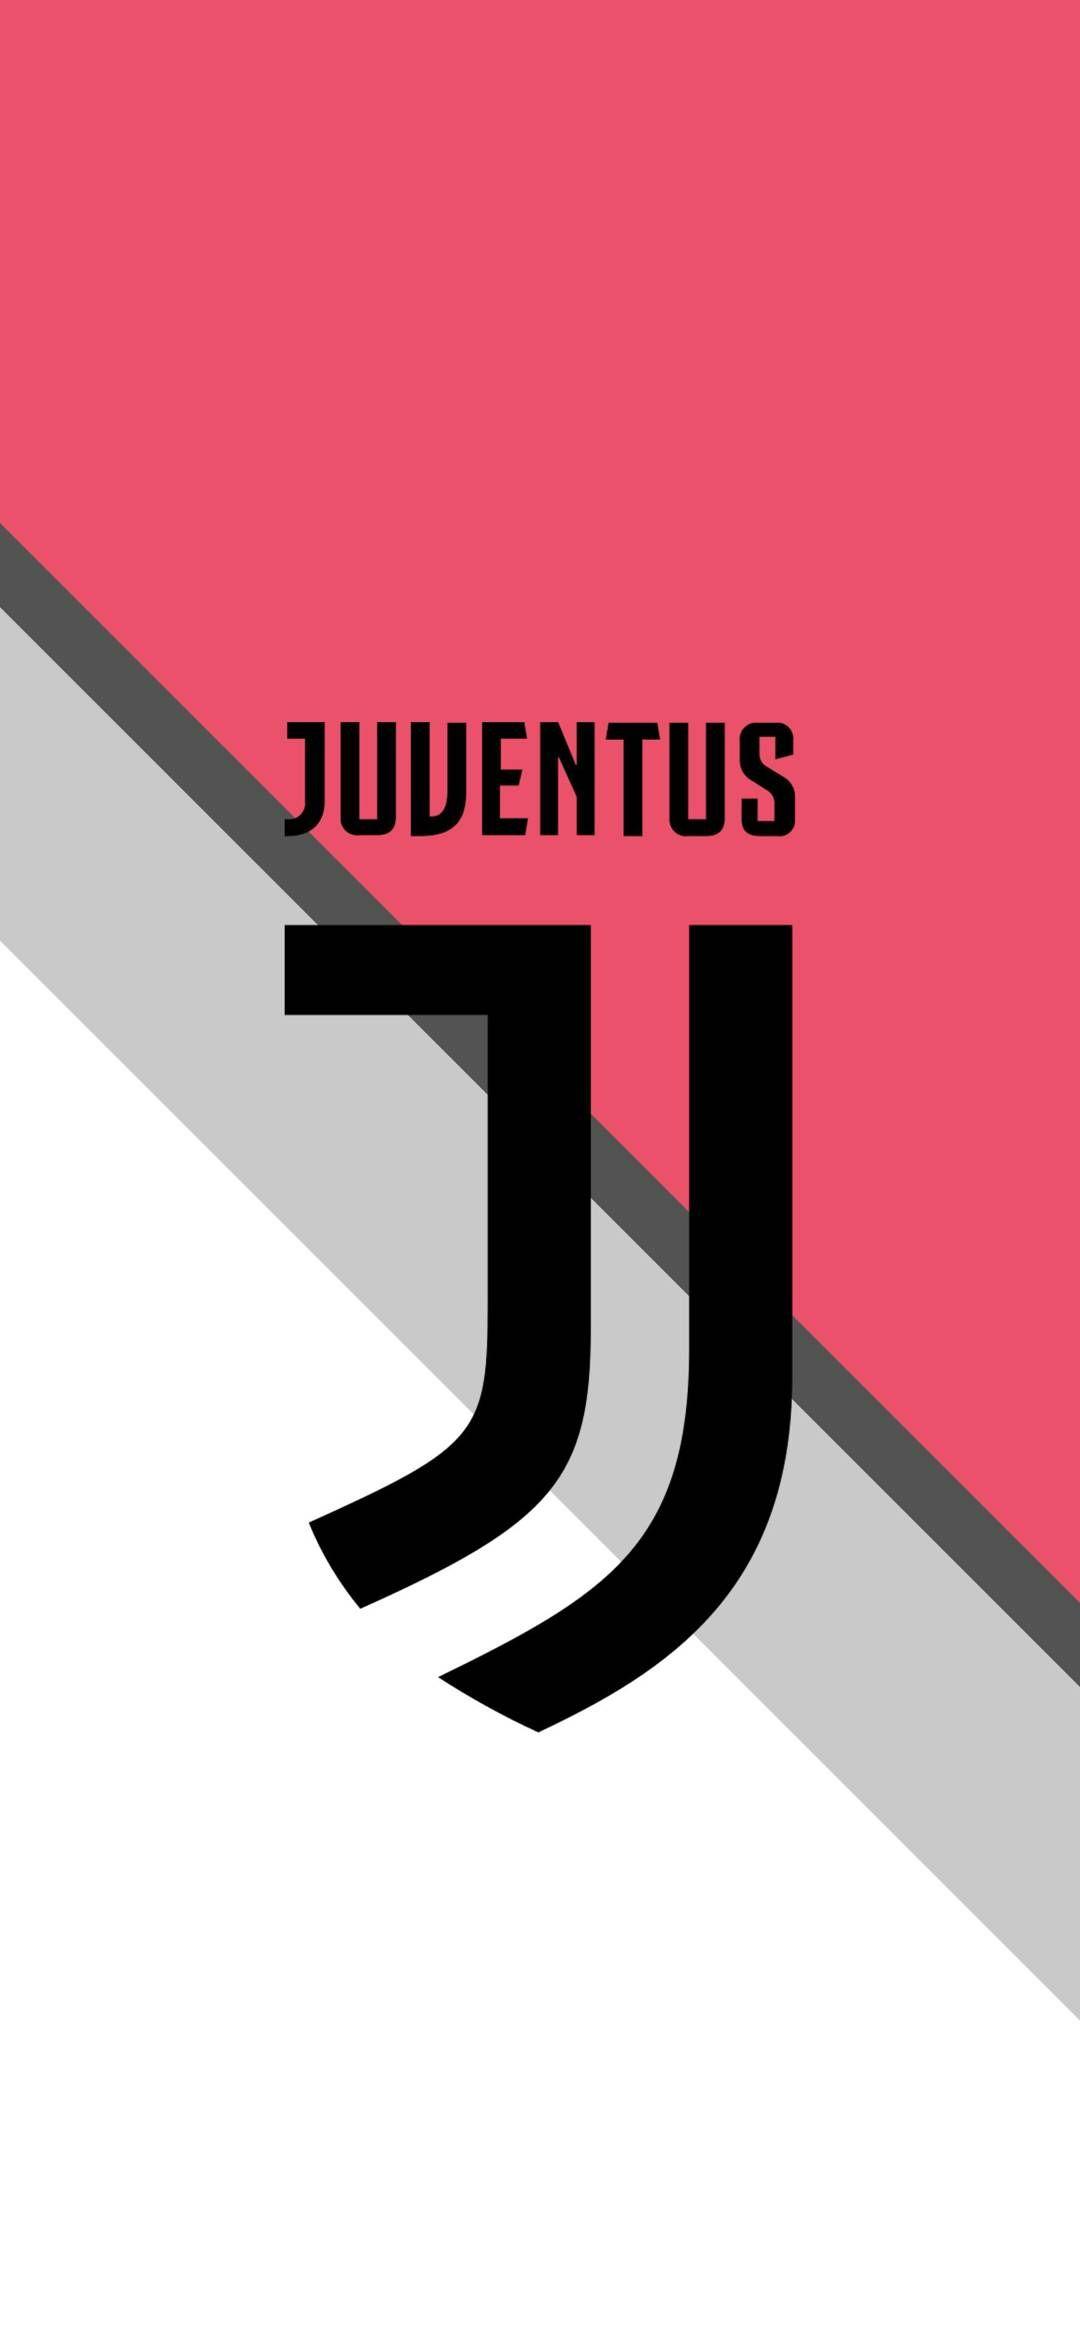 Juventus Iphone Wallpapers Top Free Juventus Iphone Backgrounds Wallpaperaccess